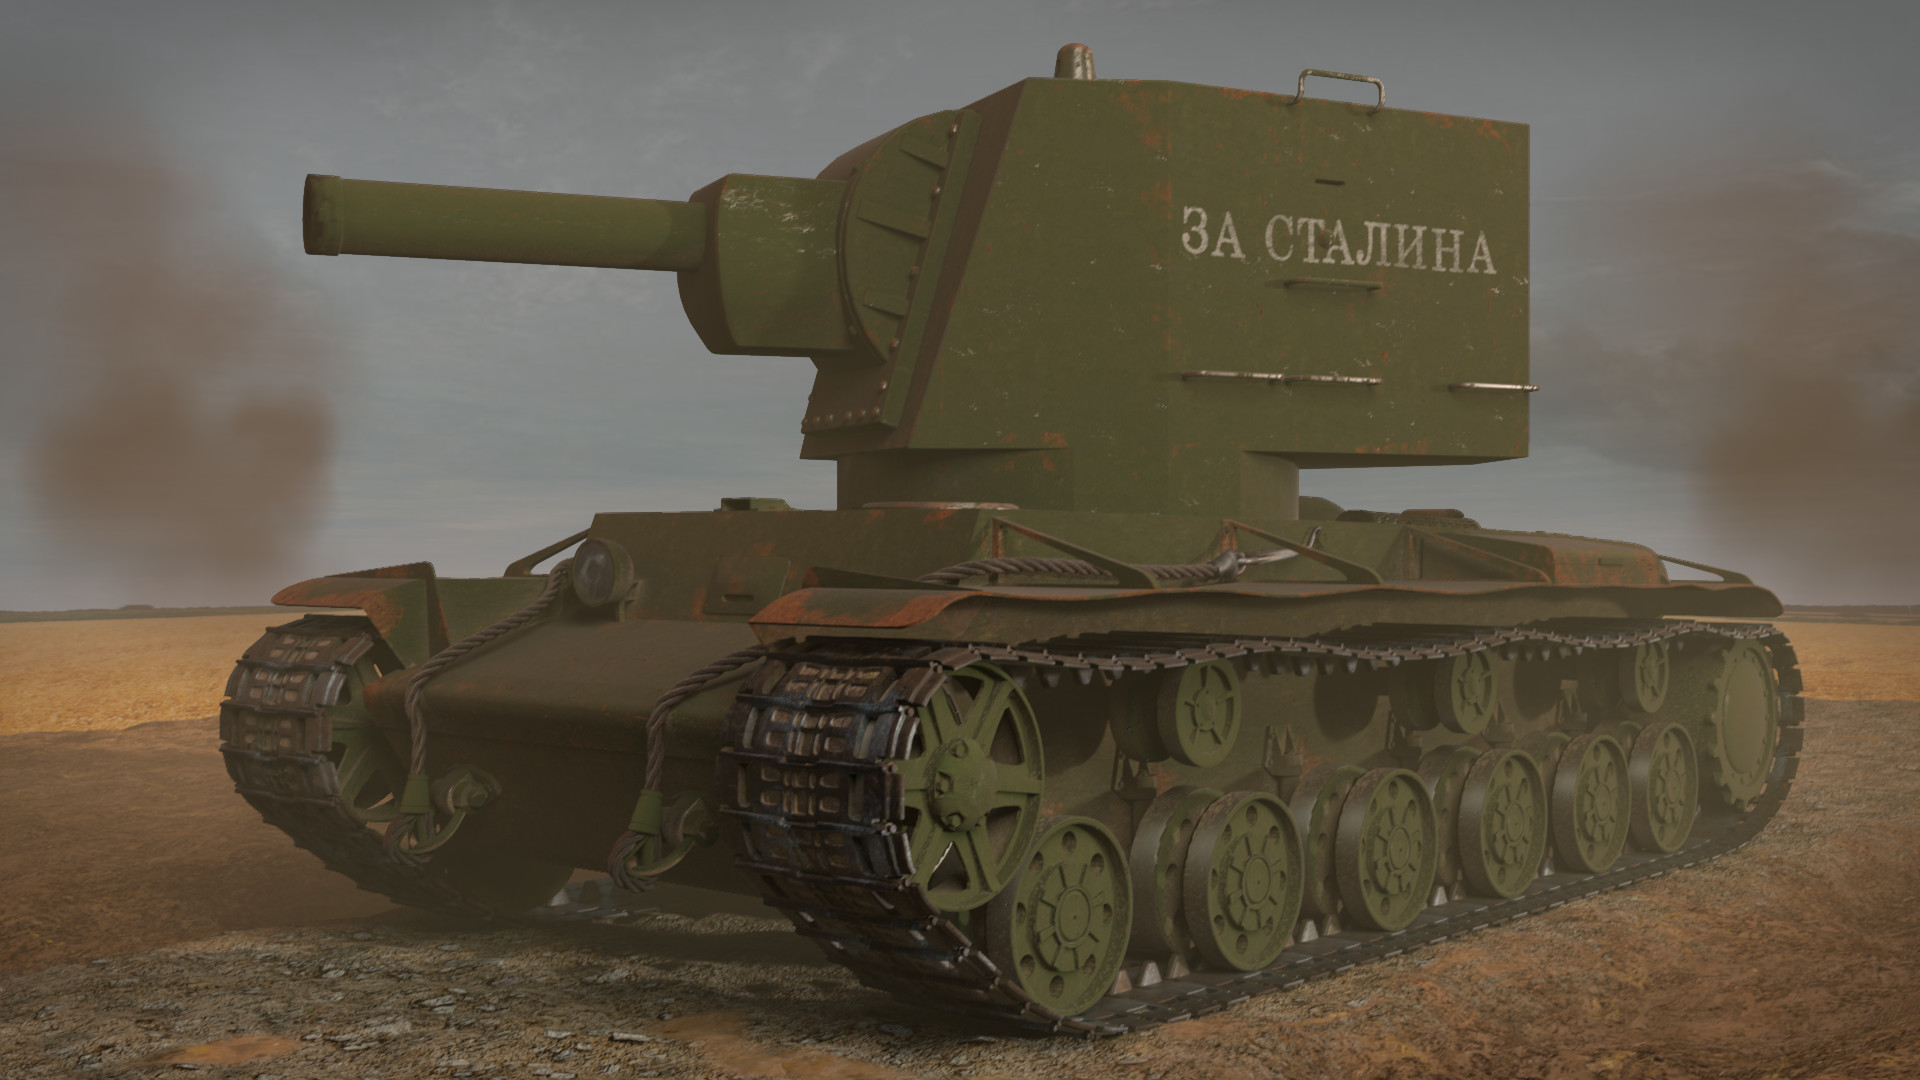 Tamiya 35375 Russian Heavy Tank KV-2 Model Kit / Tamiya USA